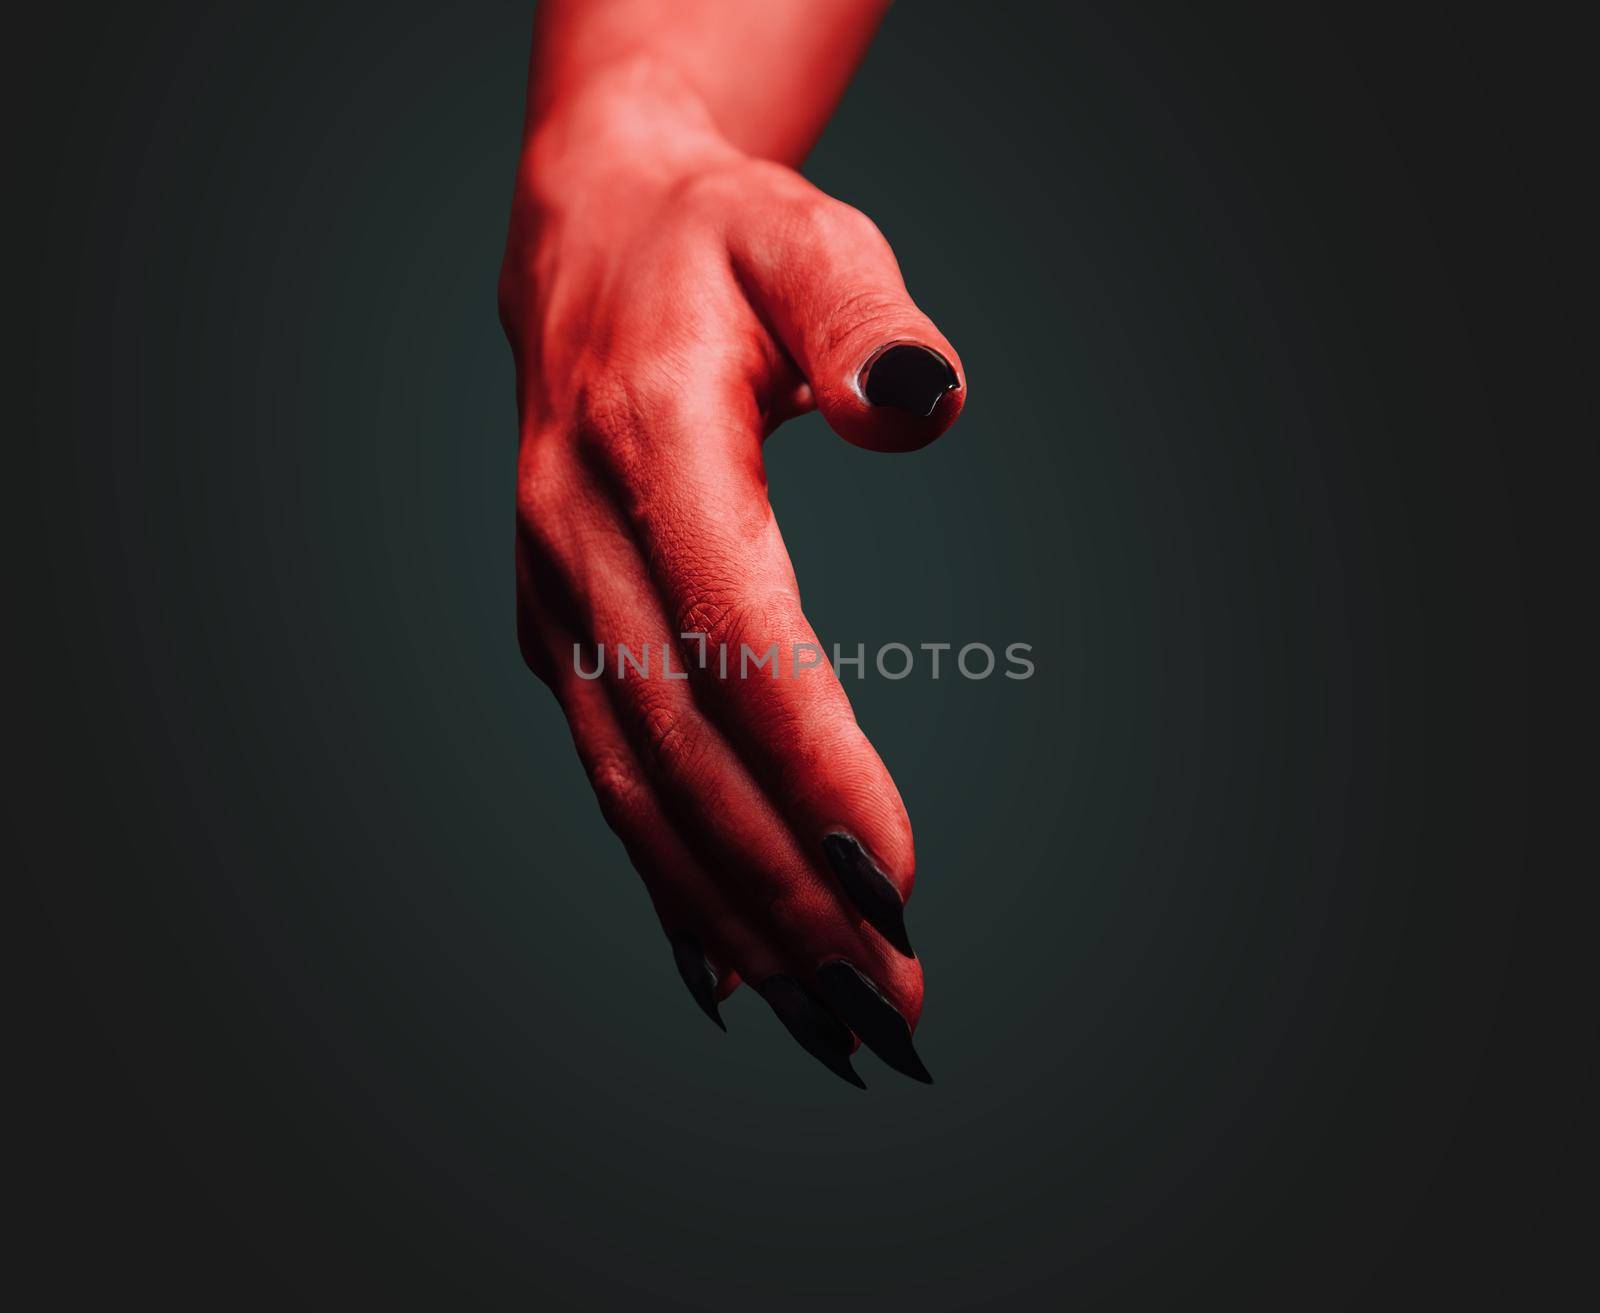 Demon hand with handshake gesture by alexAleksei